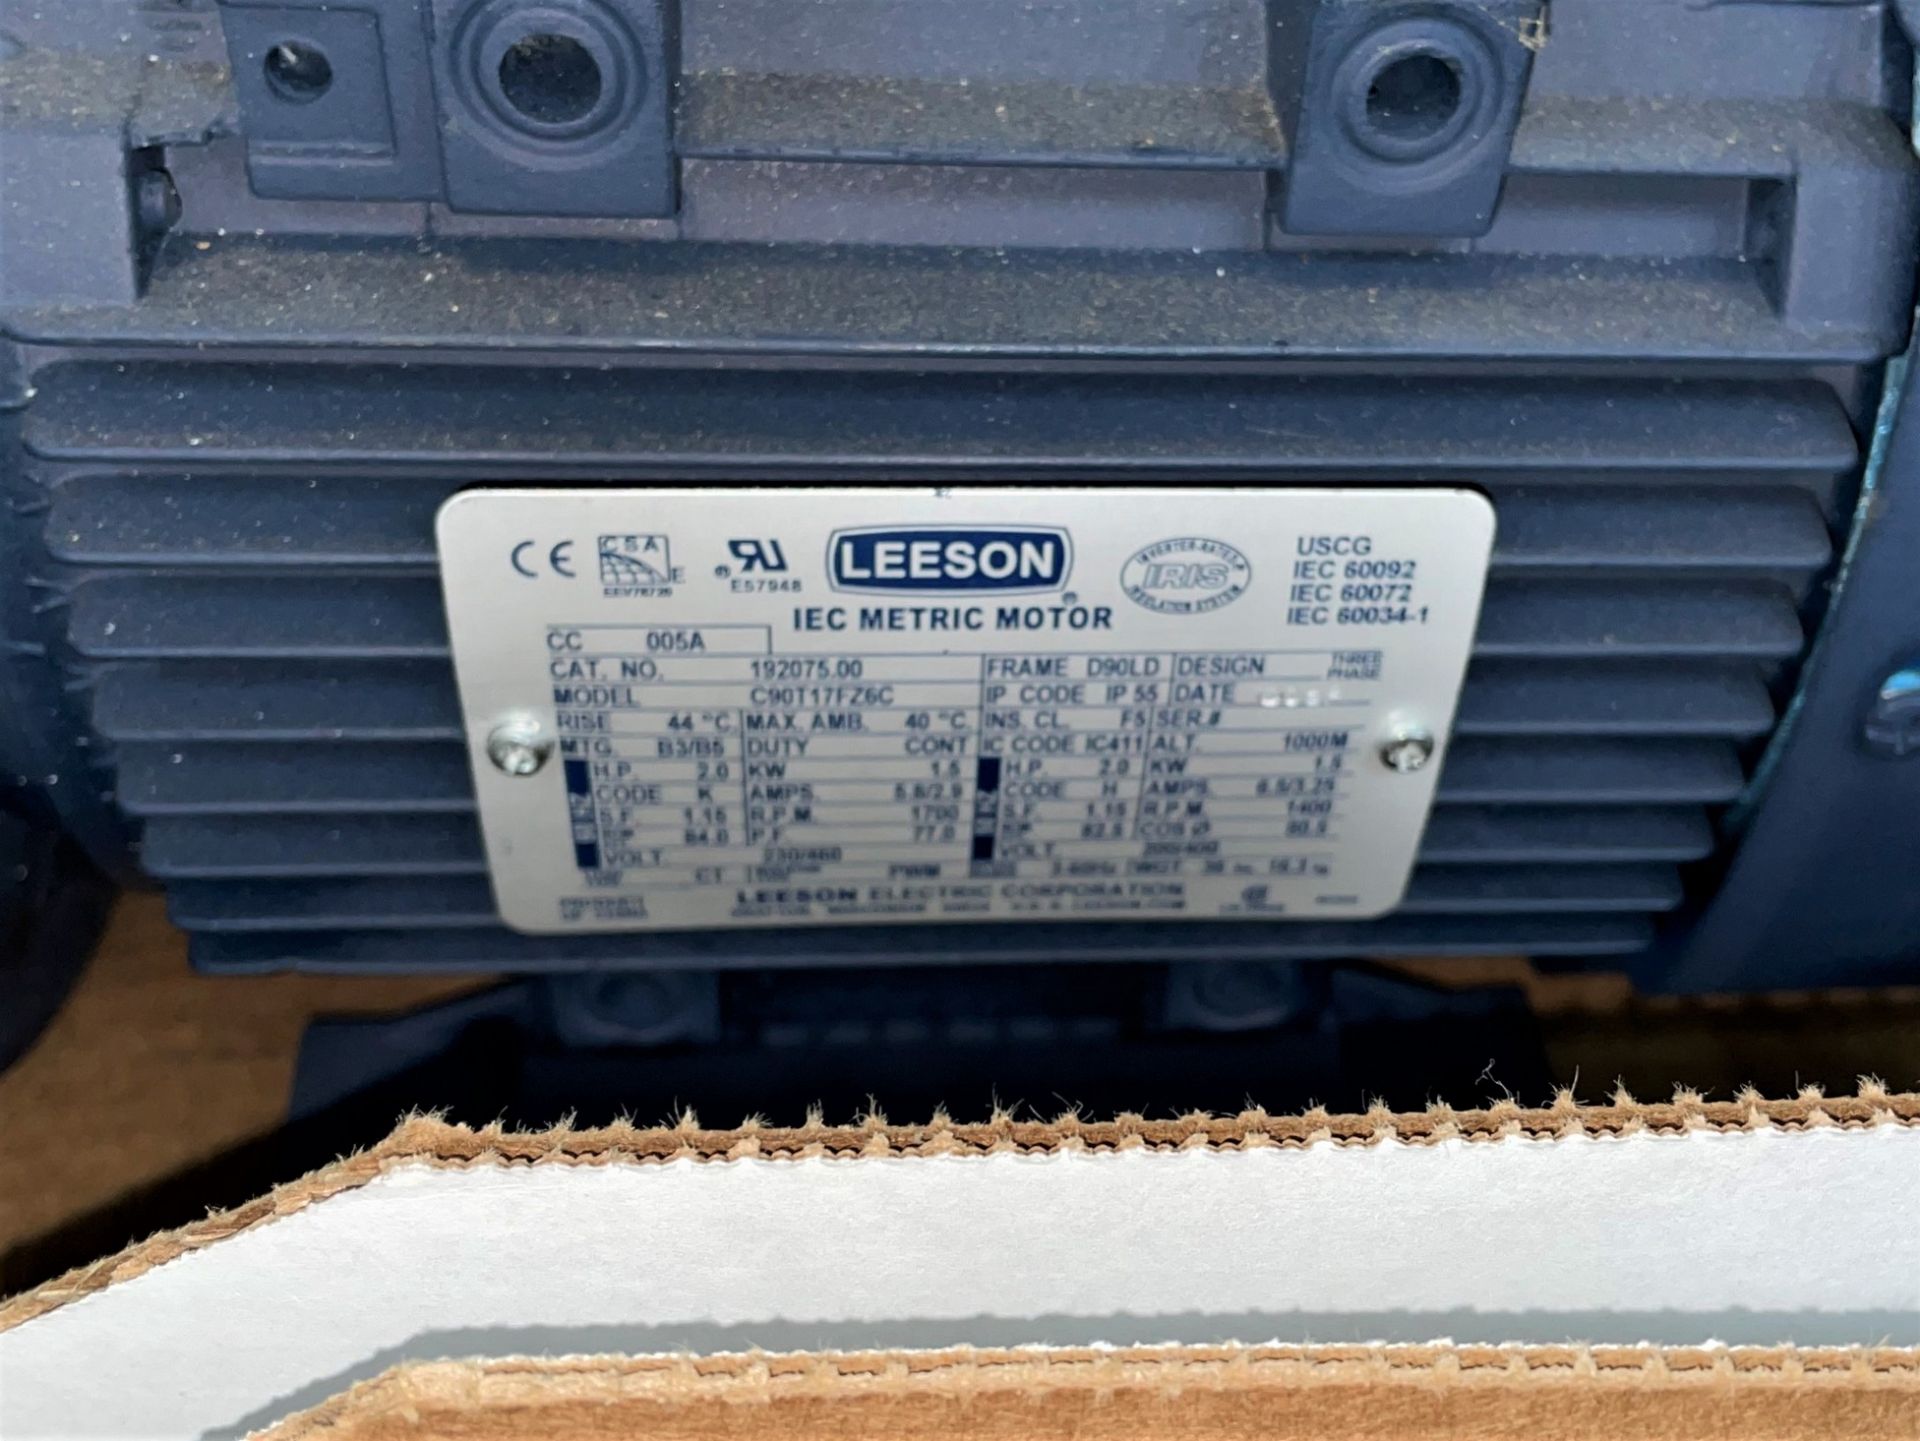 Leeson C90T17FZ6C IEC Metric Motor, 2HP - Image 2 of 2